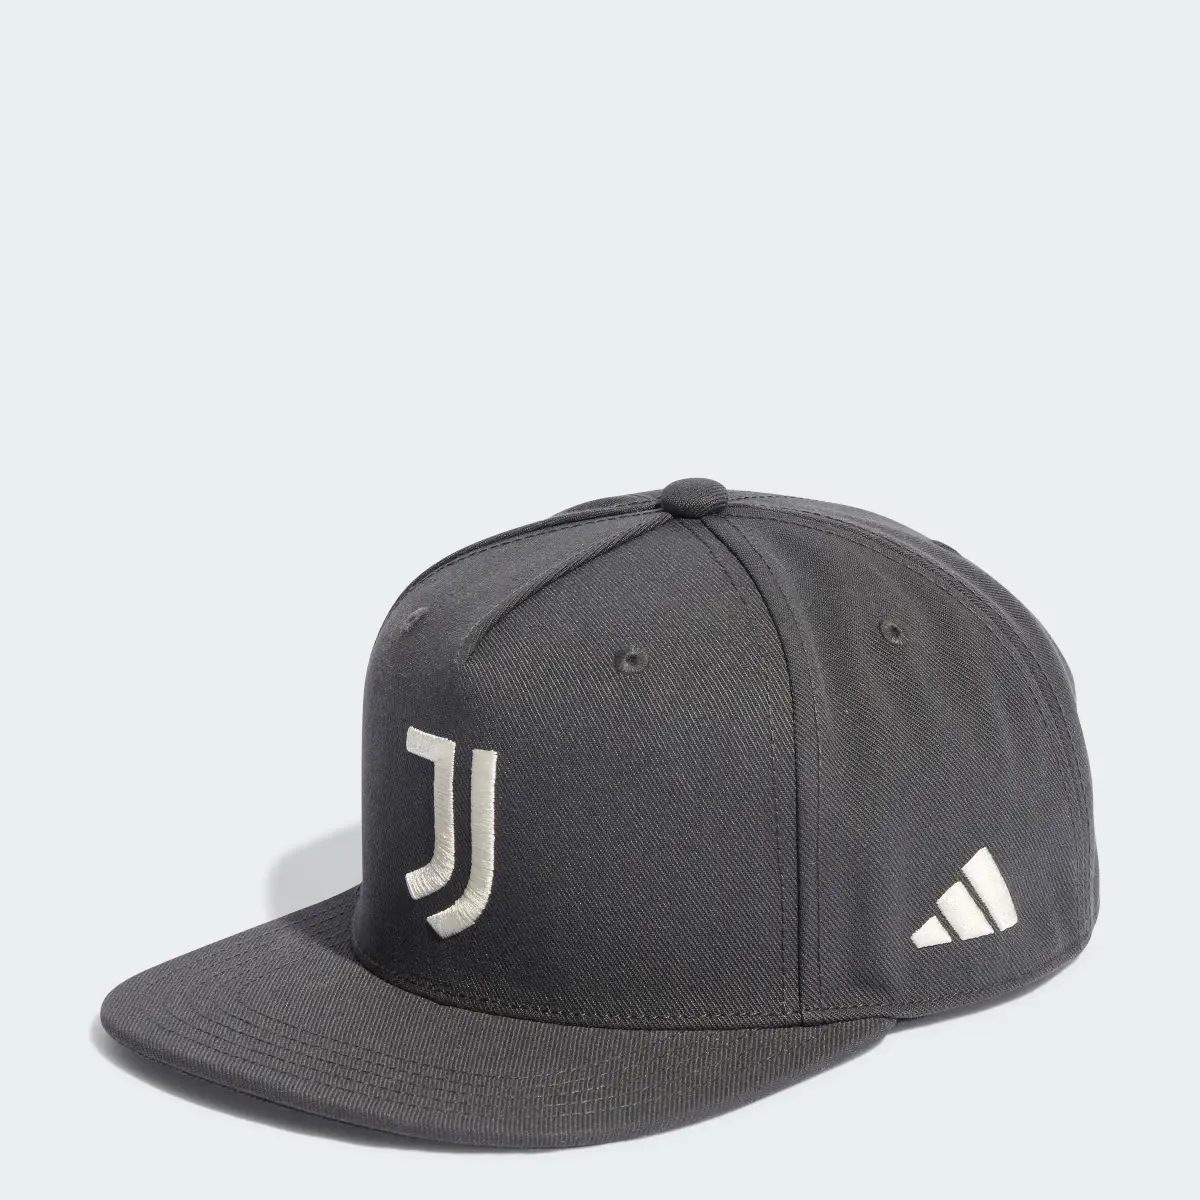 Adidas Juventus Football Snapback Cap. 1